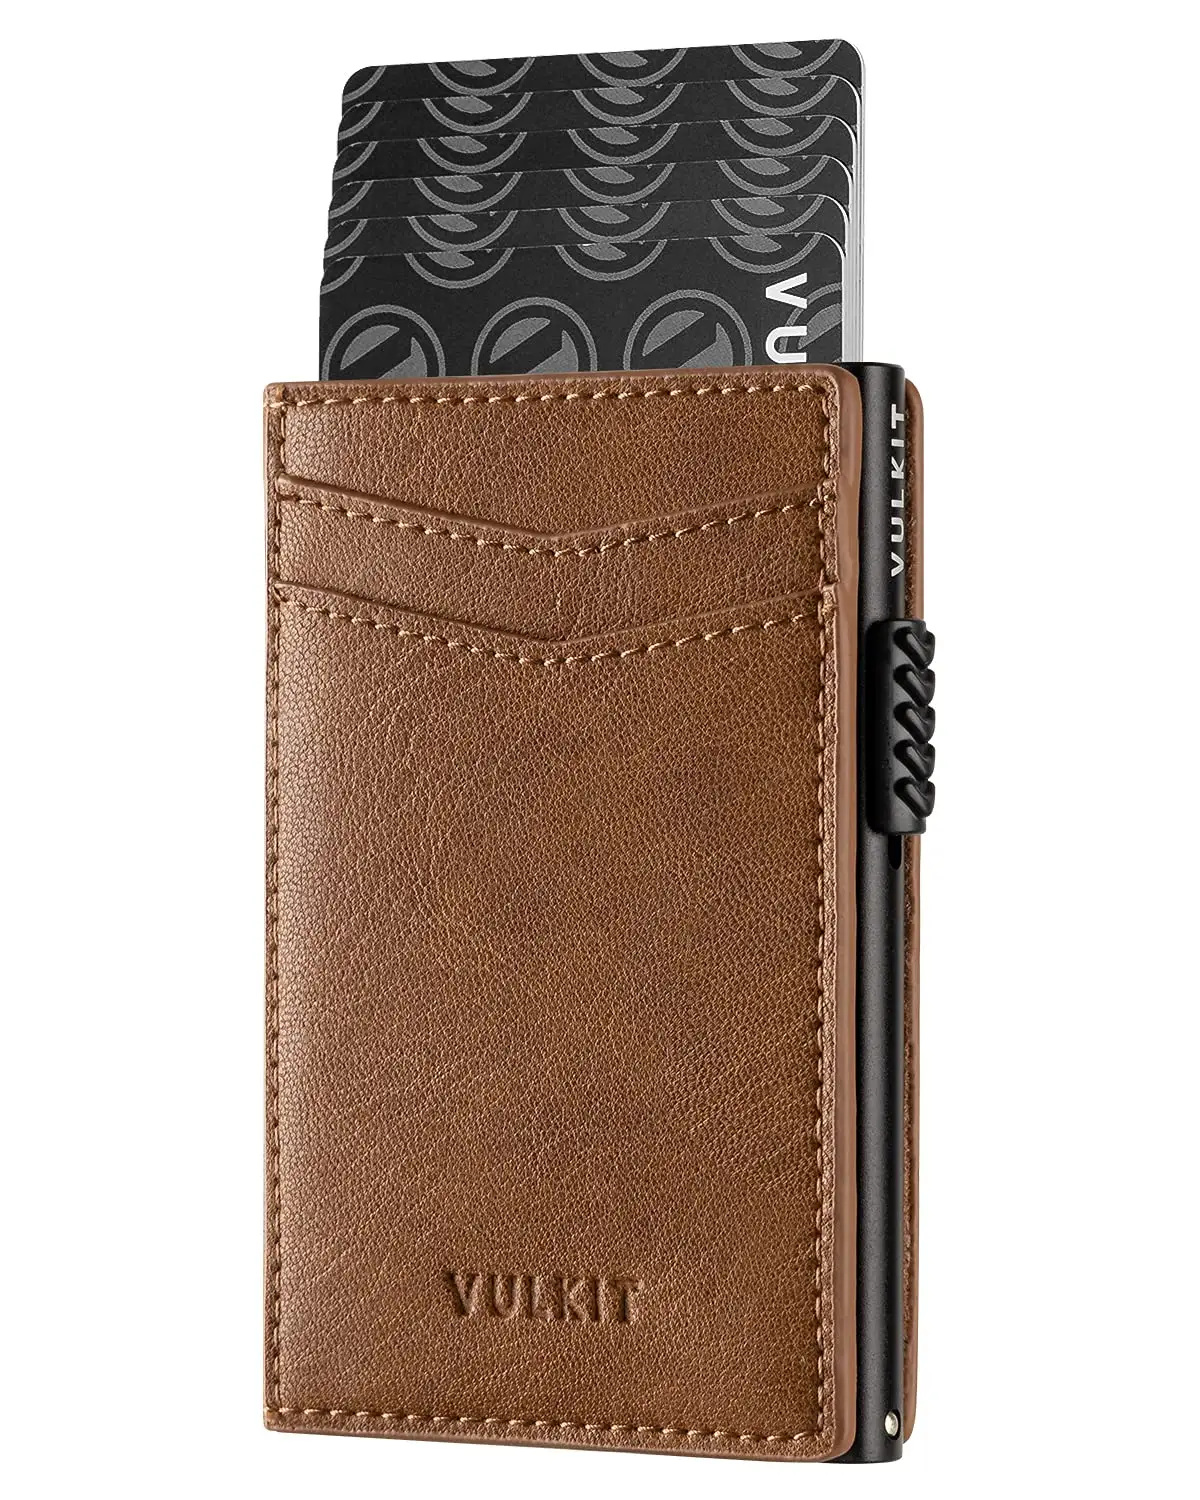 Amazon Top Seller 2022 Fashion Business Mens Black Pu Leather Pop Up Metal Slim Smart Rfid Wallet Slim Card Holder Aluminum